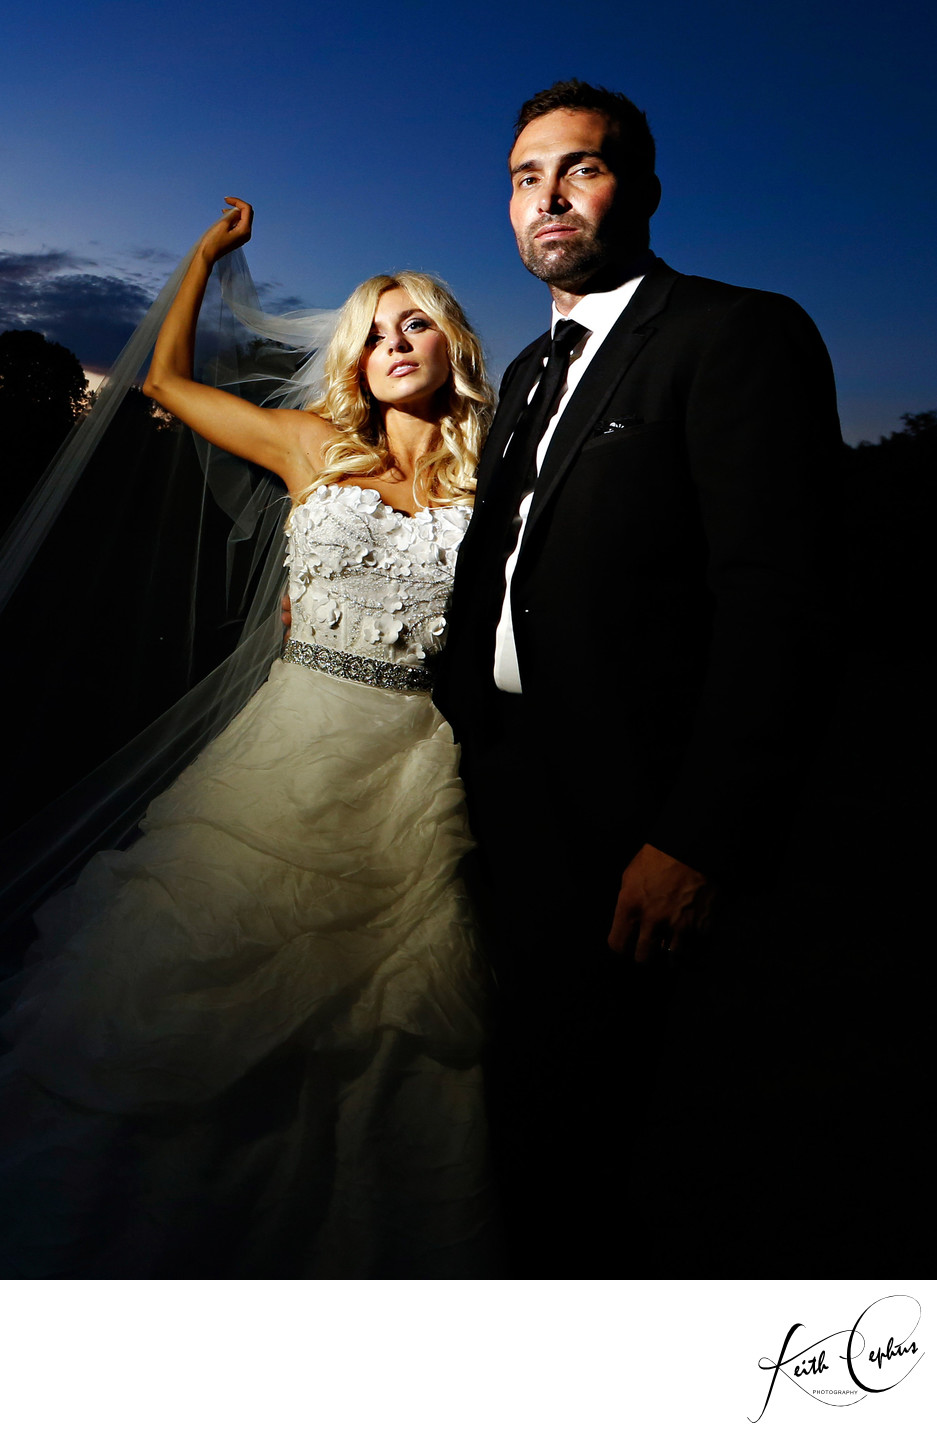 Top wedding photographer Washington DC